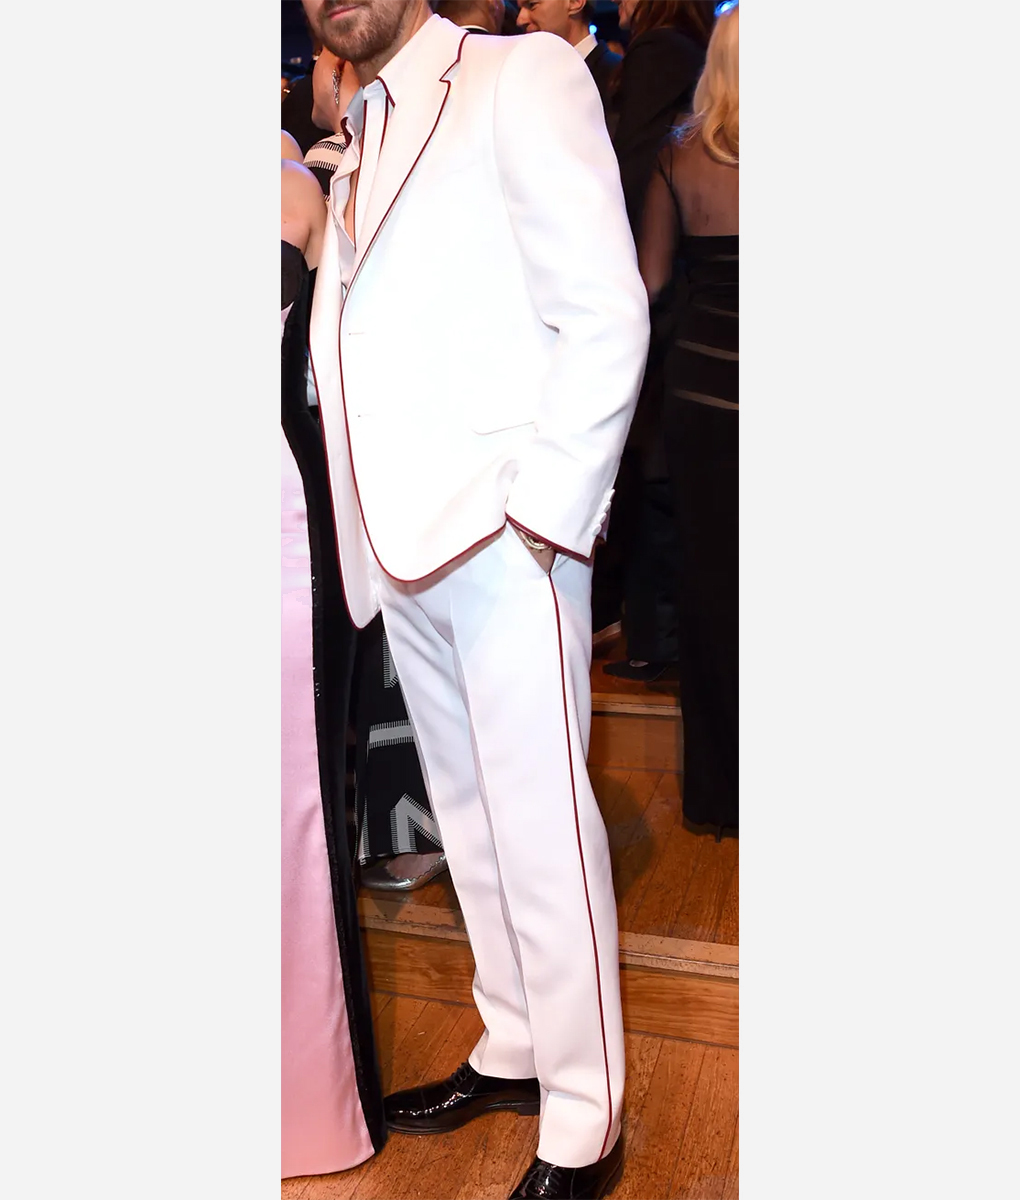 Ryan Gosling BAFTA Awards White Suit (5)